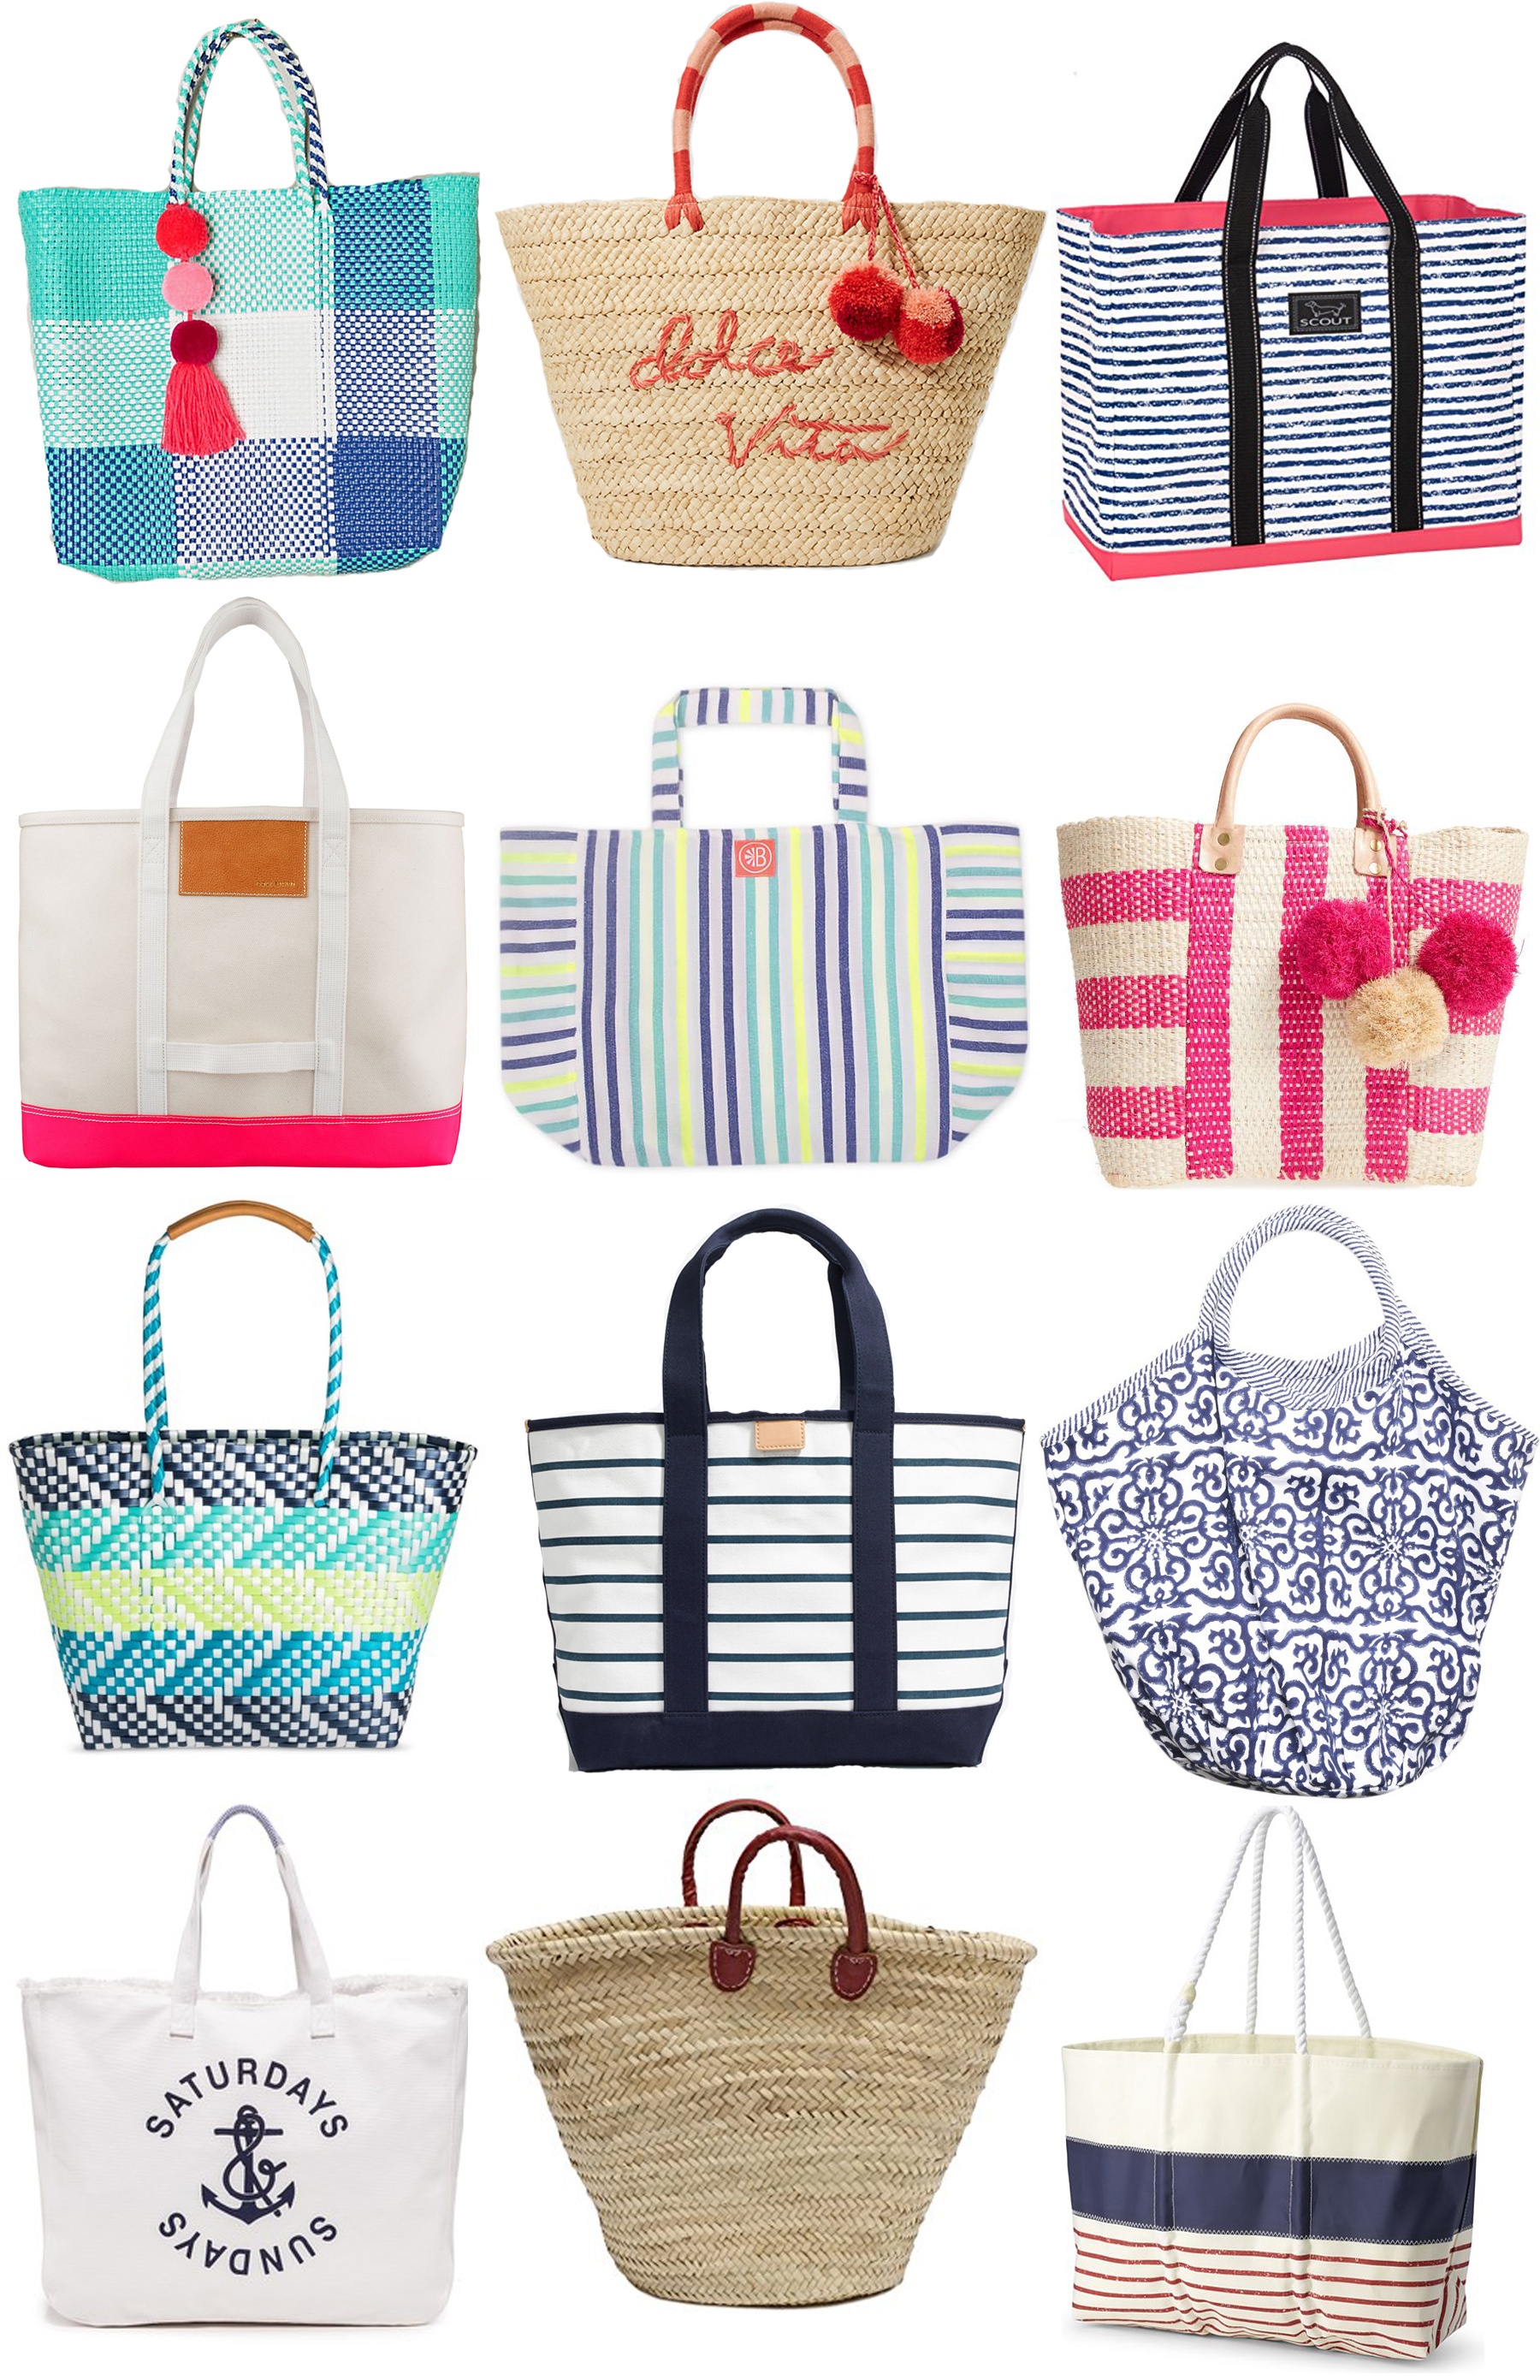 Go! Summer Beach Bag Pattern